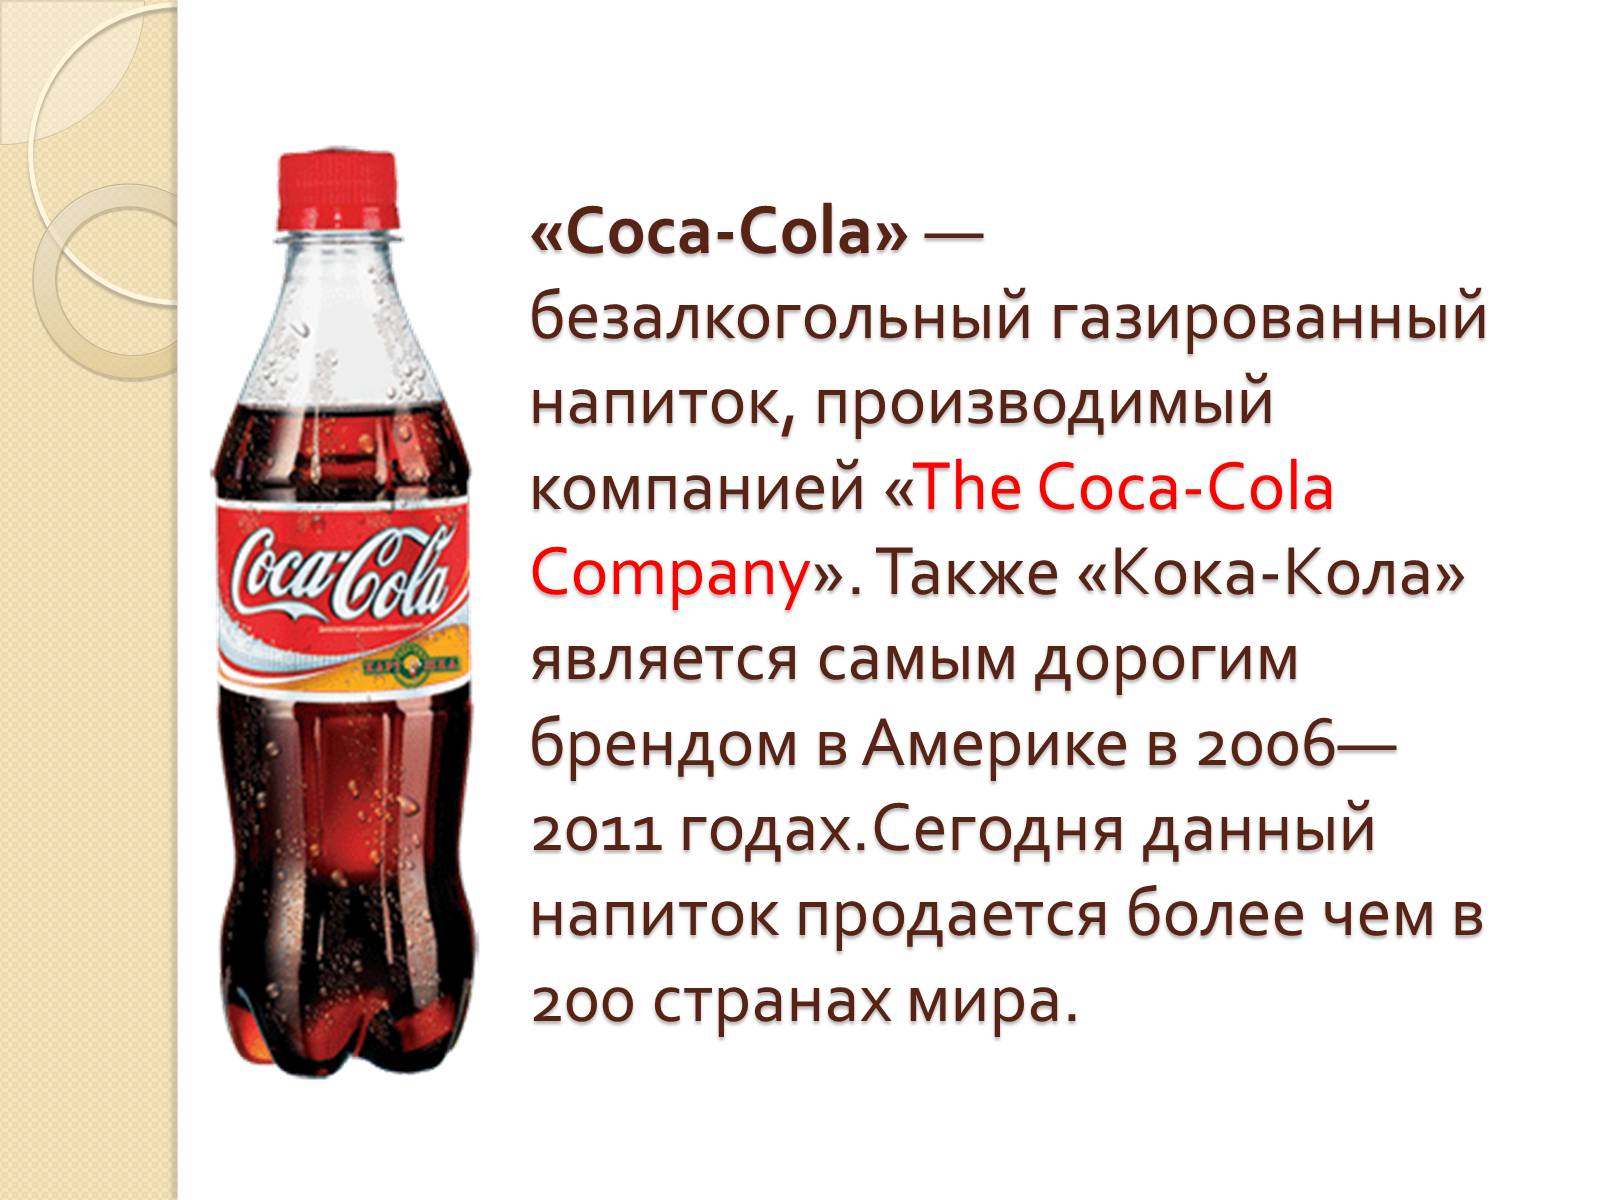 Назови любой продукт. Кока кола презентация. Реклама про Кока колу. Название газированных напитков. Газированные напитки компании Кока кола.